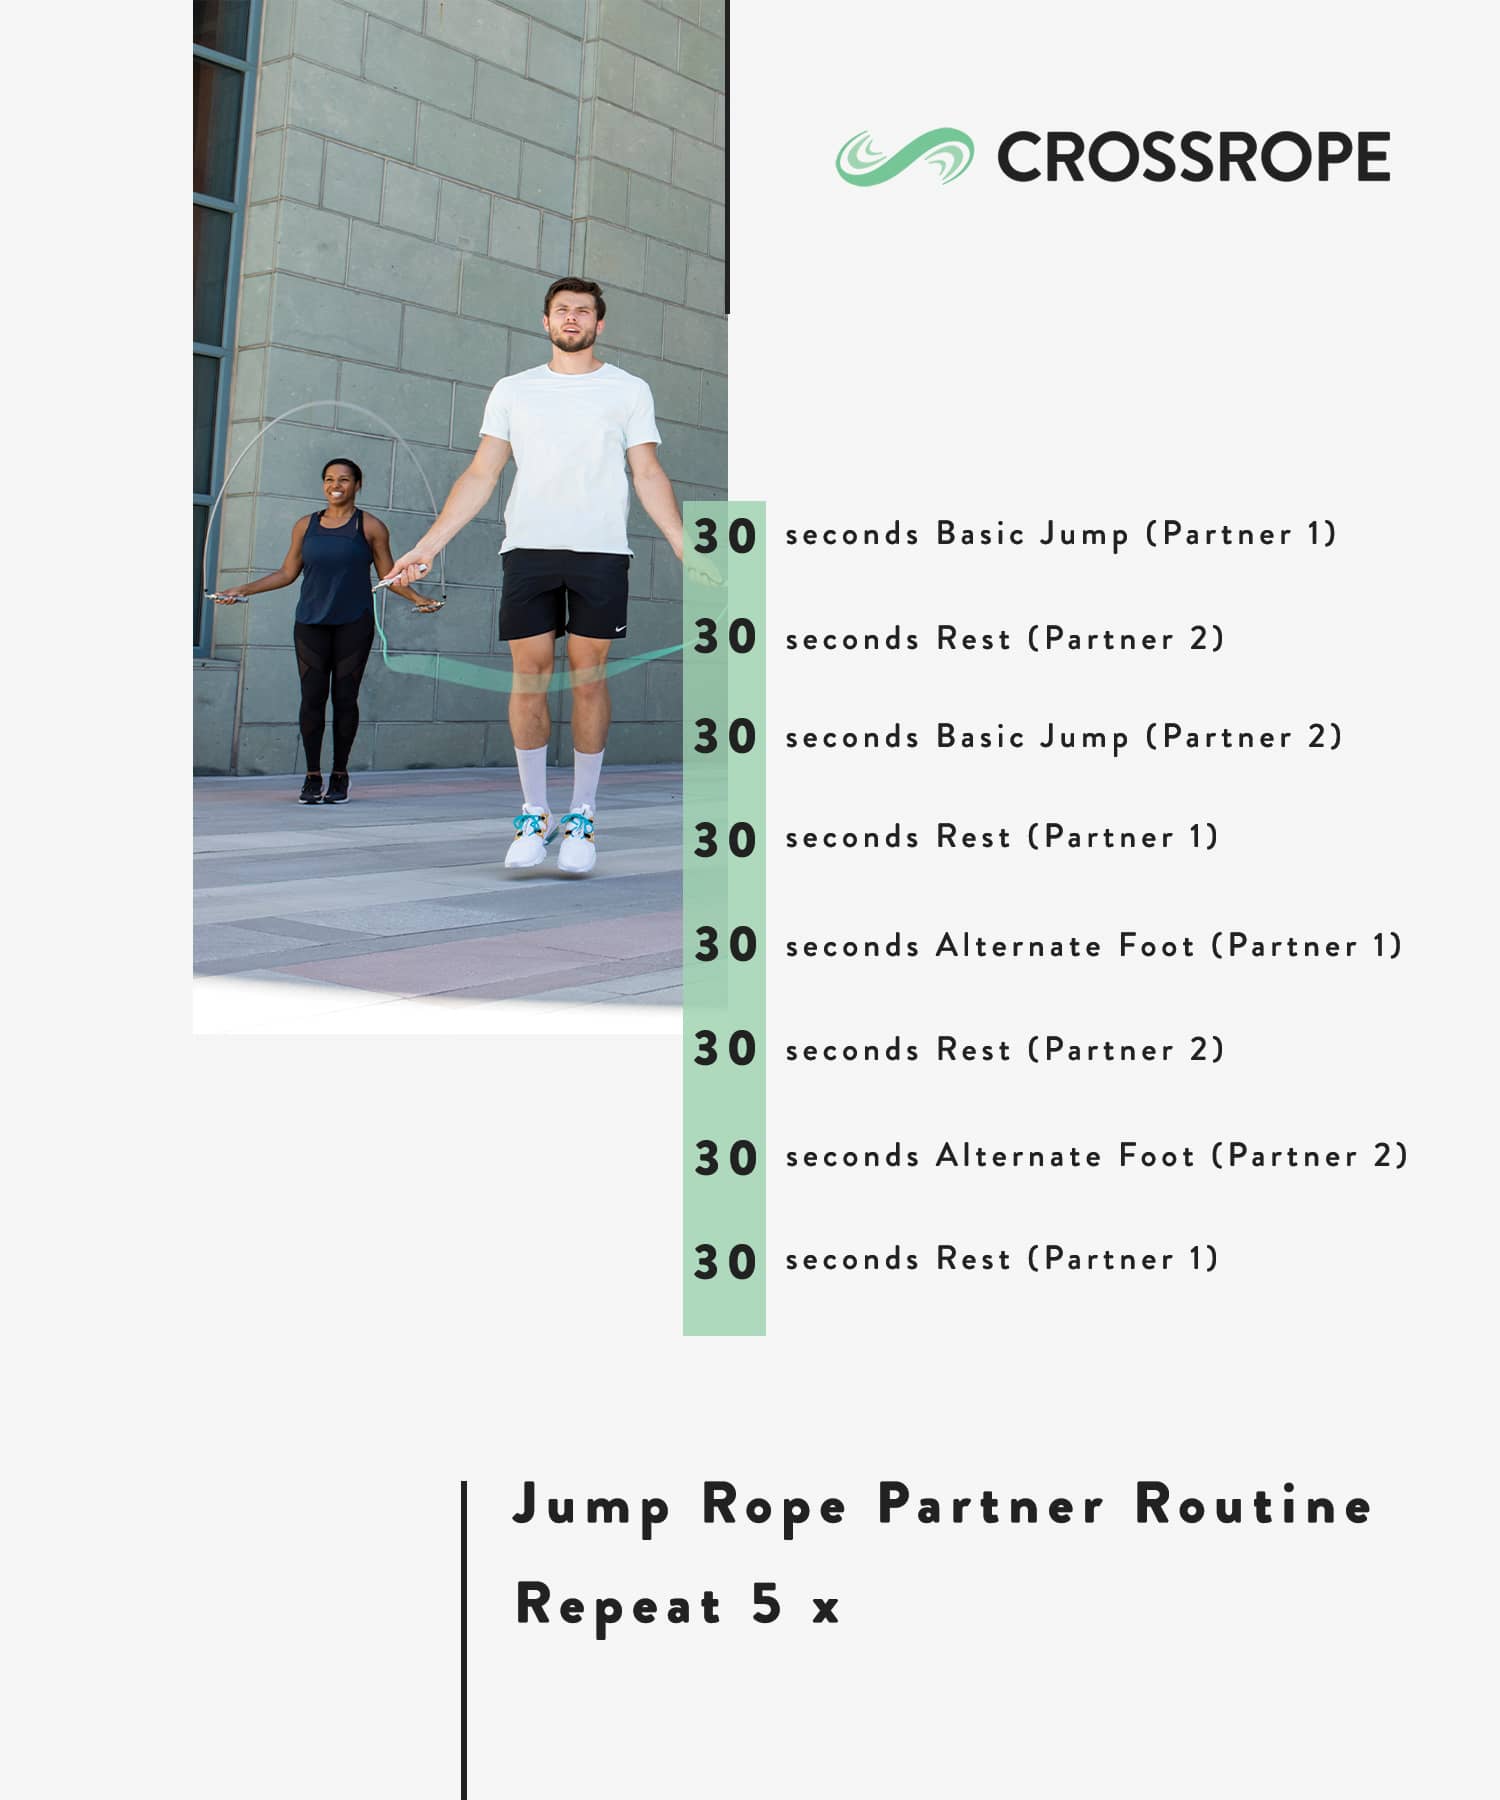 jump rope cardio routine